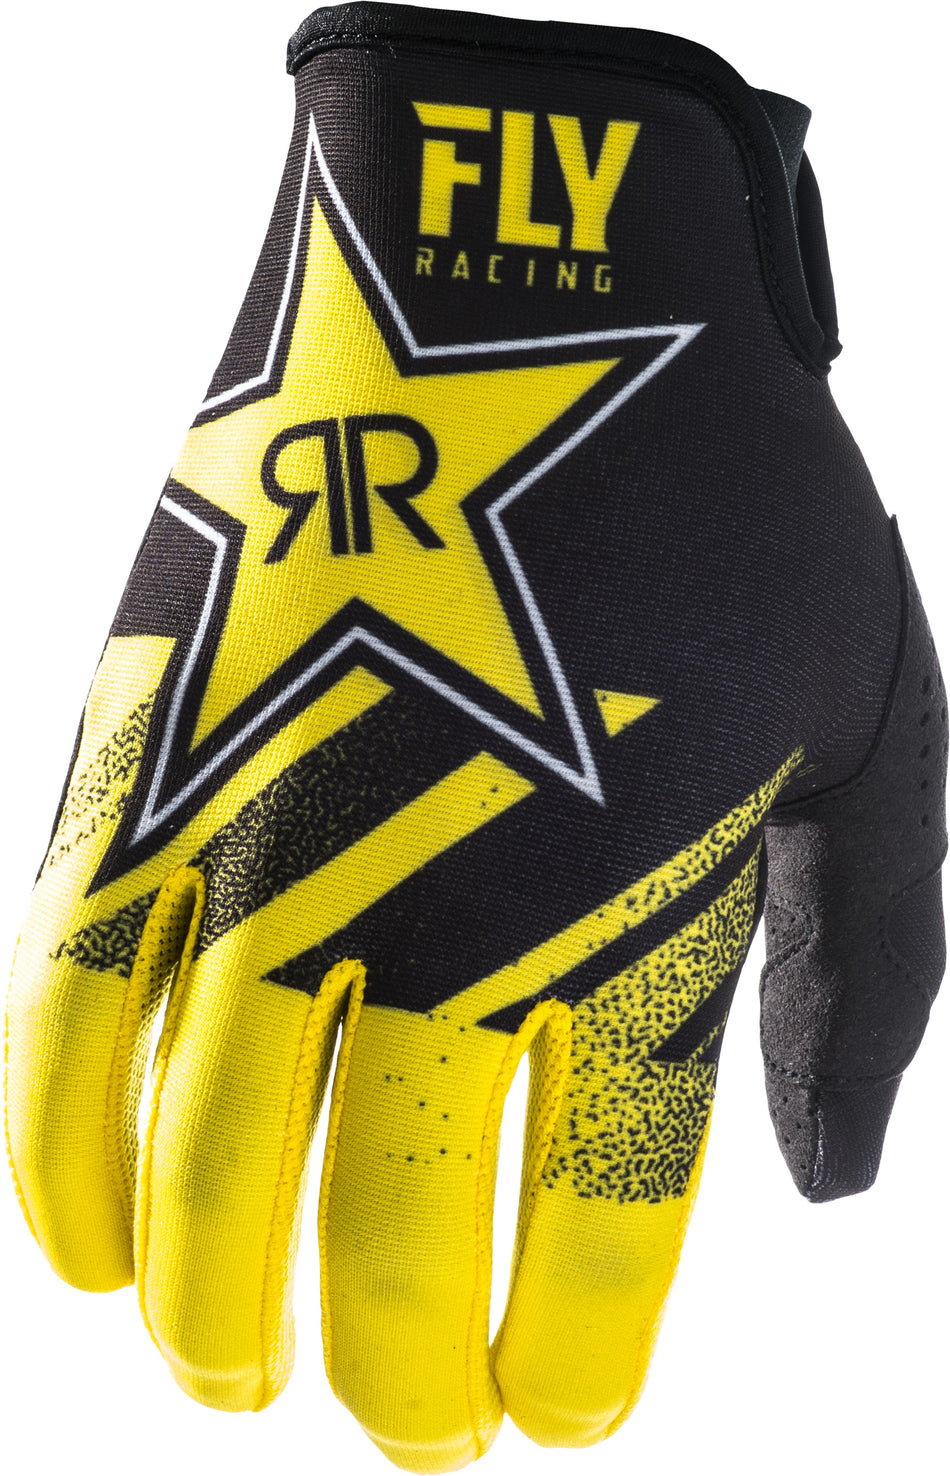 FLY RACING Lite Hydrogen Rockstar Gloves Yellow/Black Sz 08 372-01808